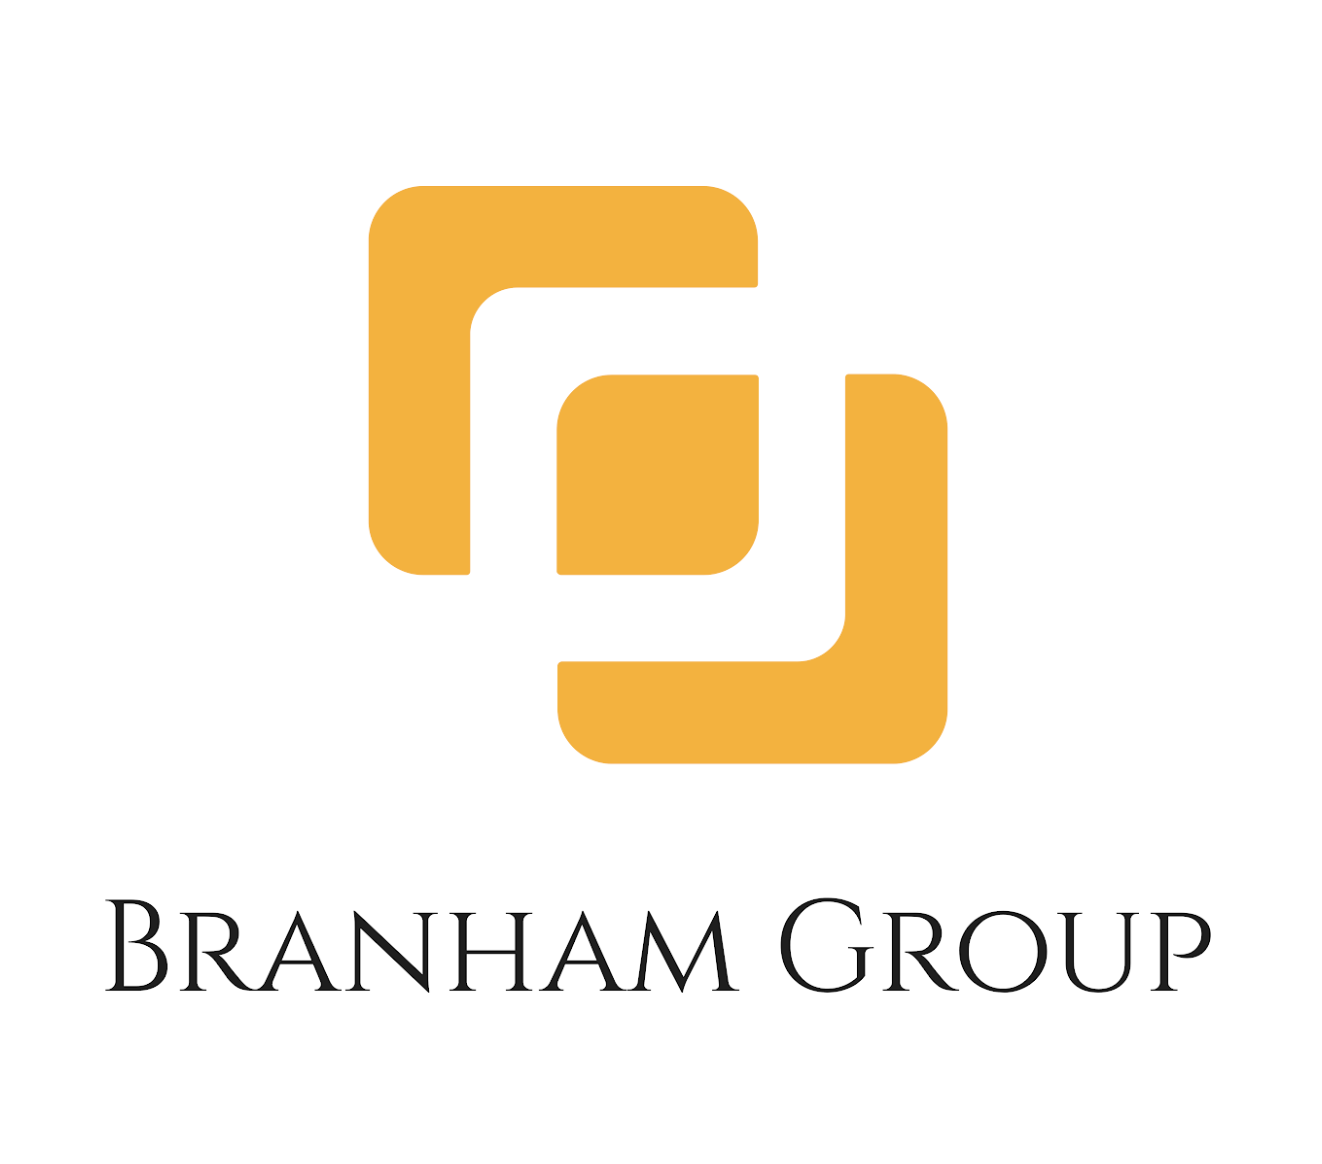 Branham Group